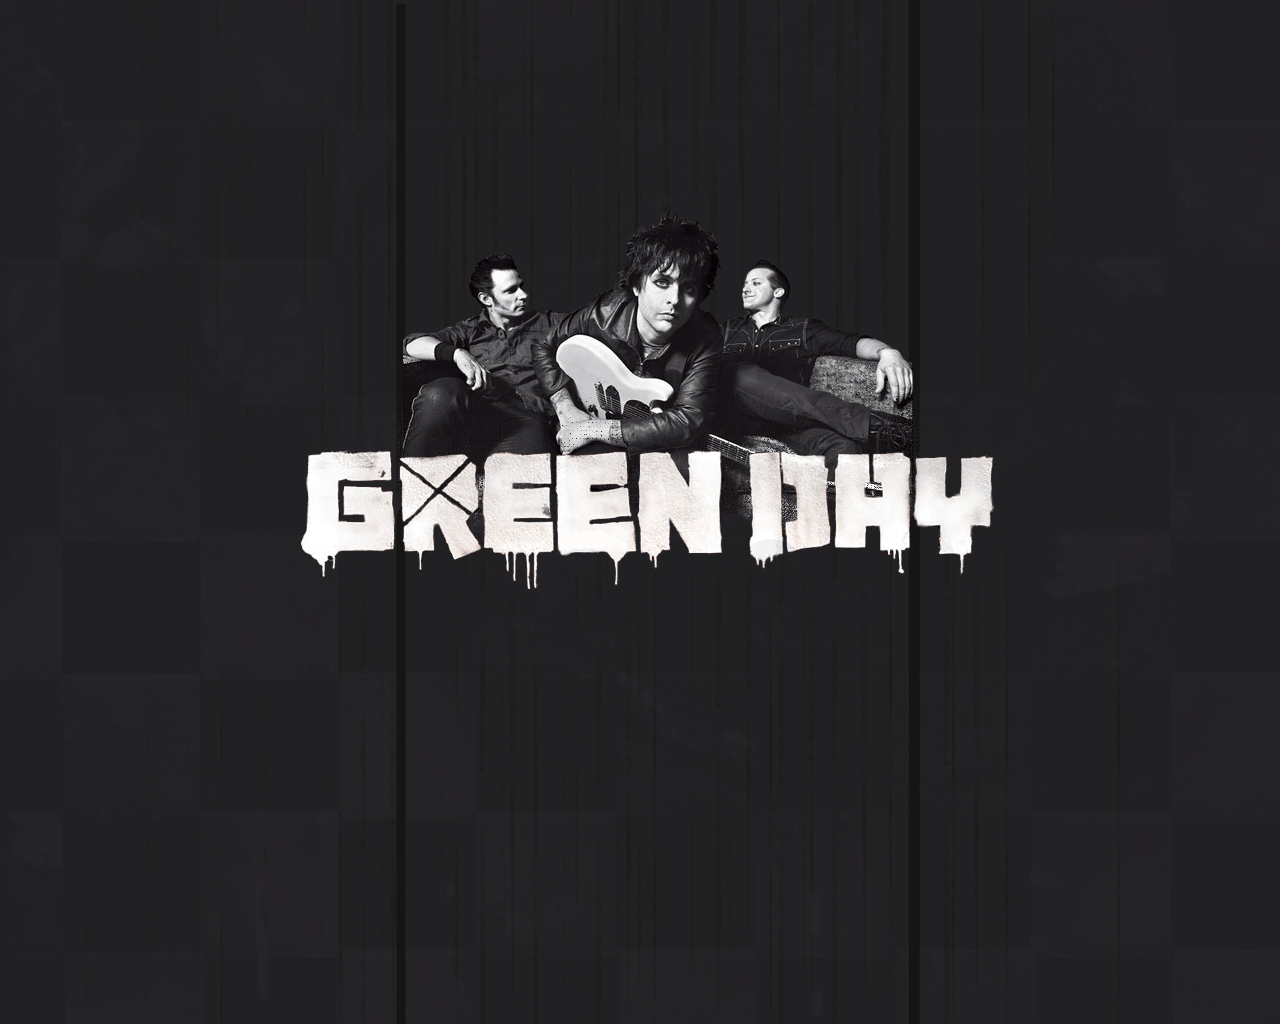 Wallpaper For > Green Day Wallpaper Live